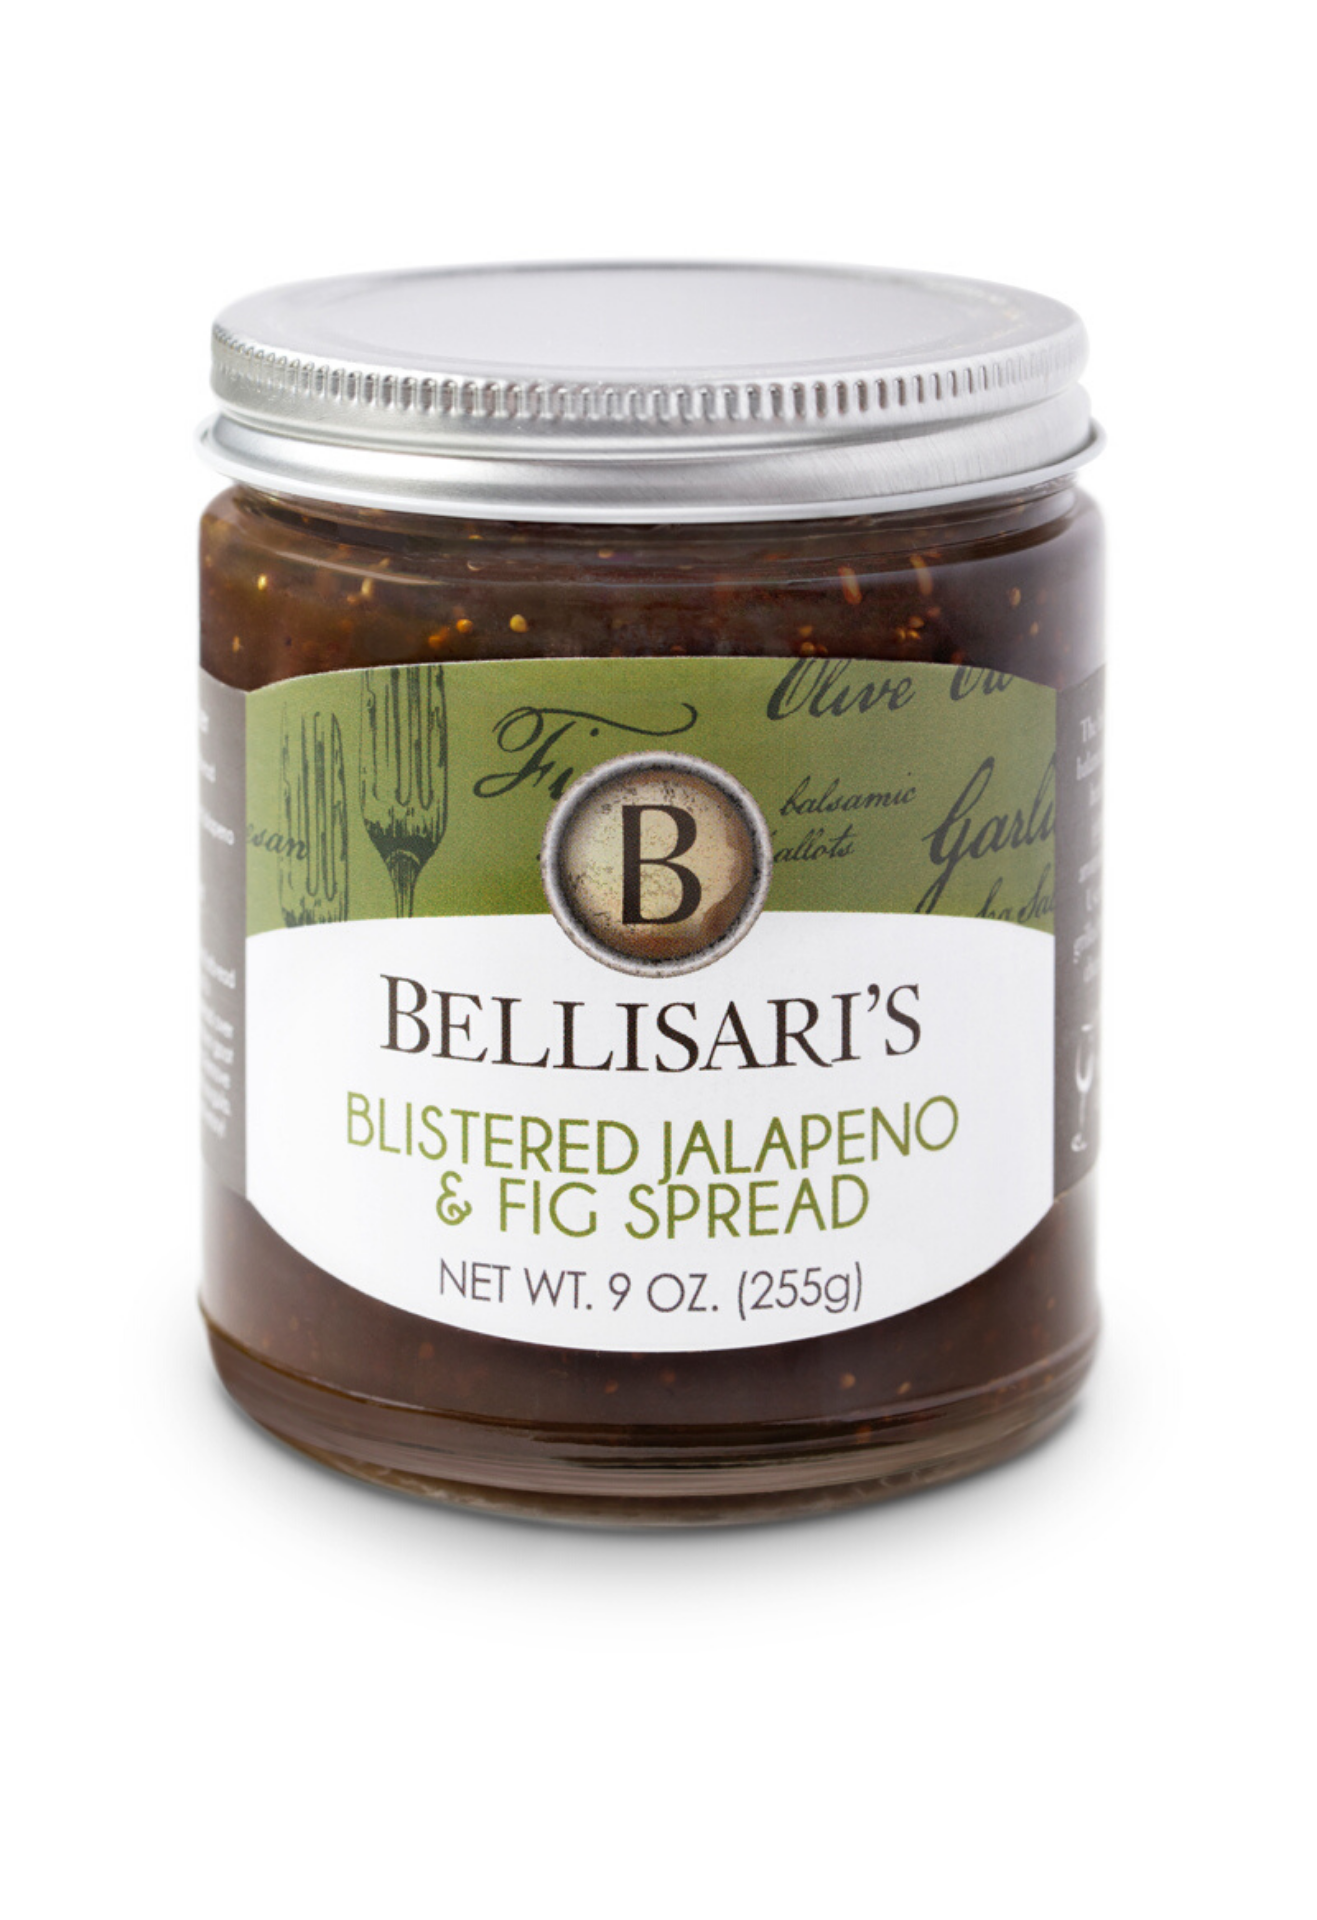 Bellisari's Blistered Jalapeno & Fig Spread